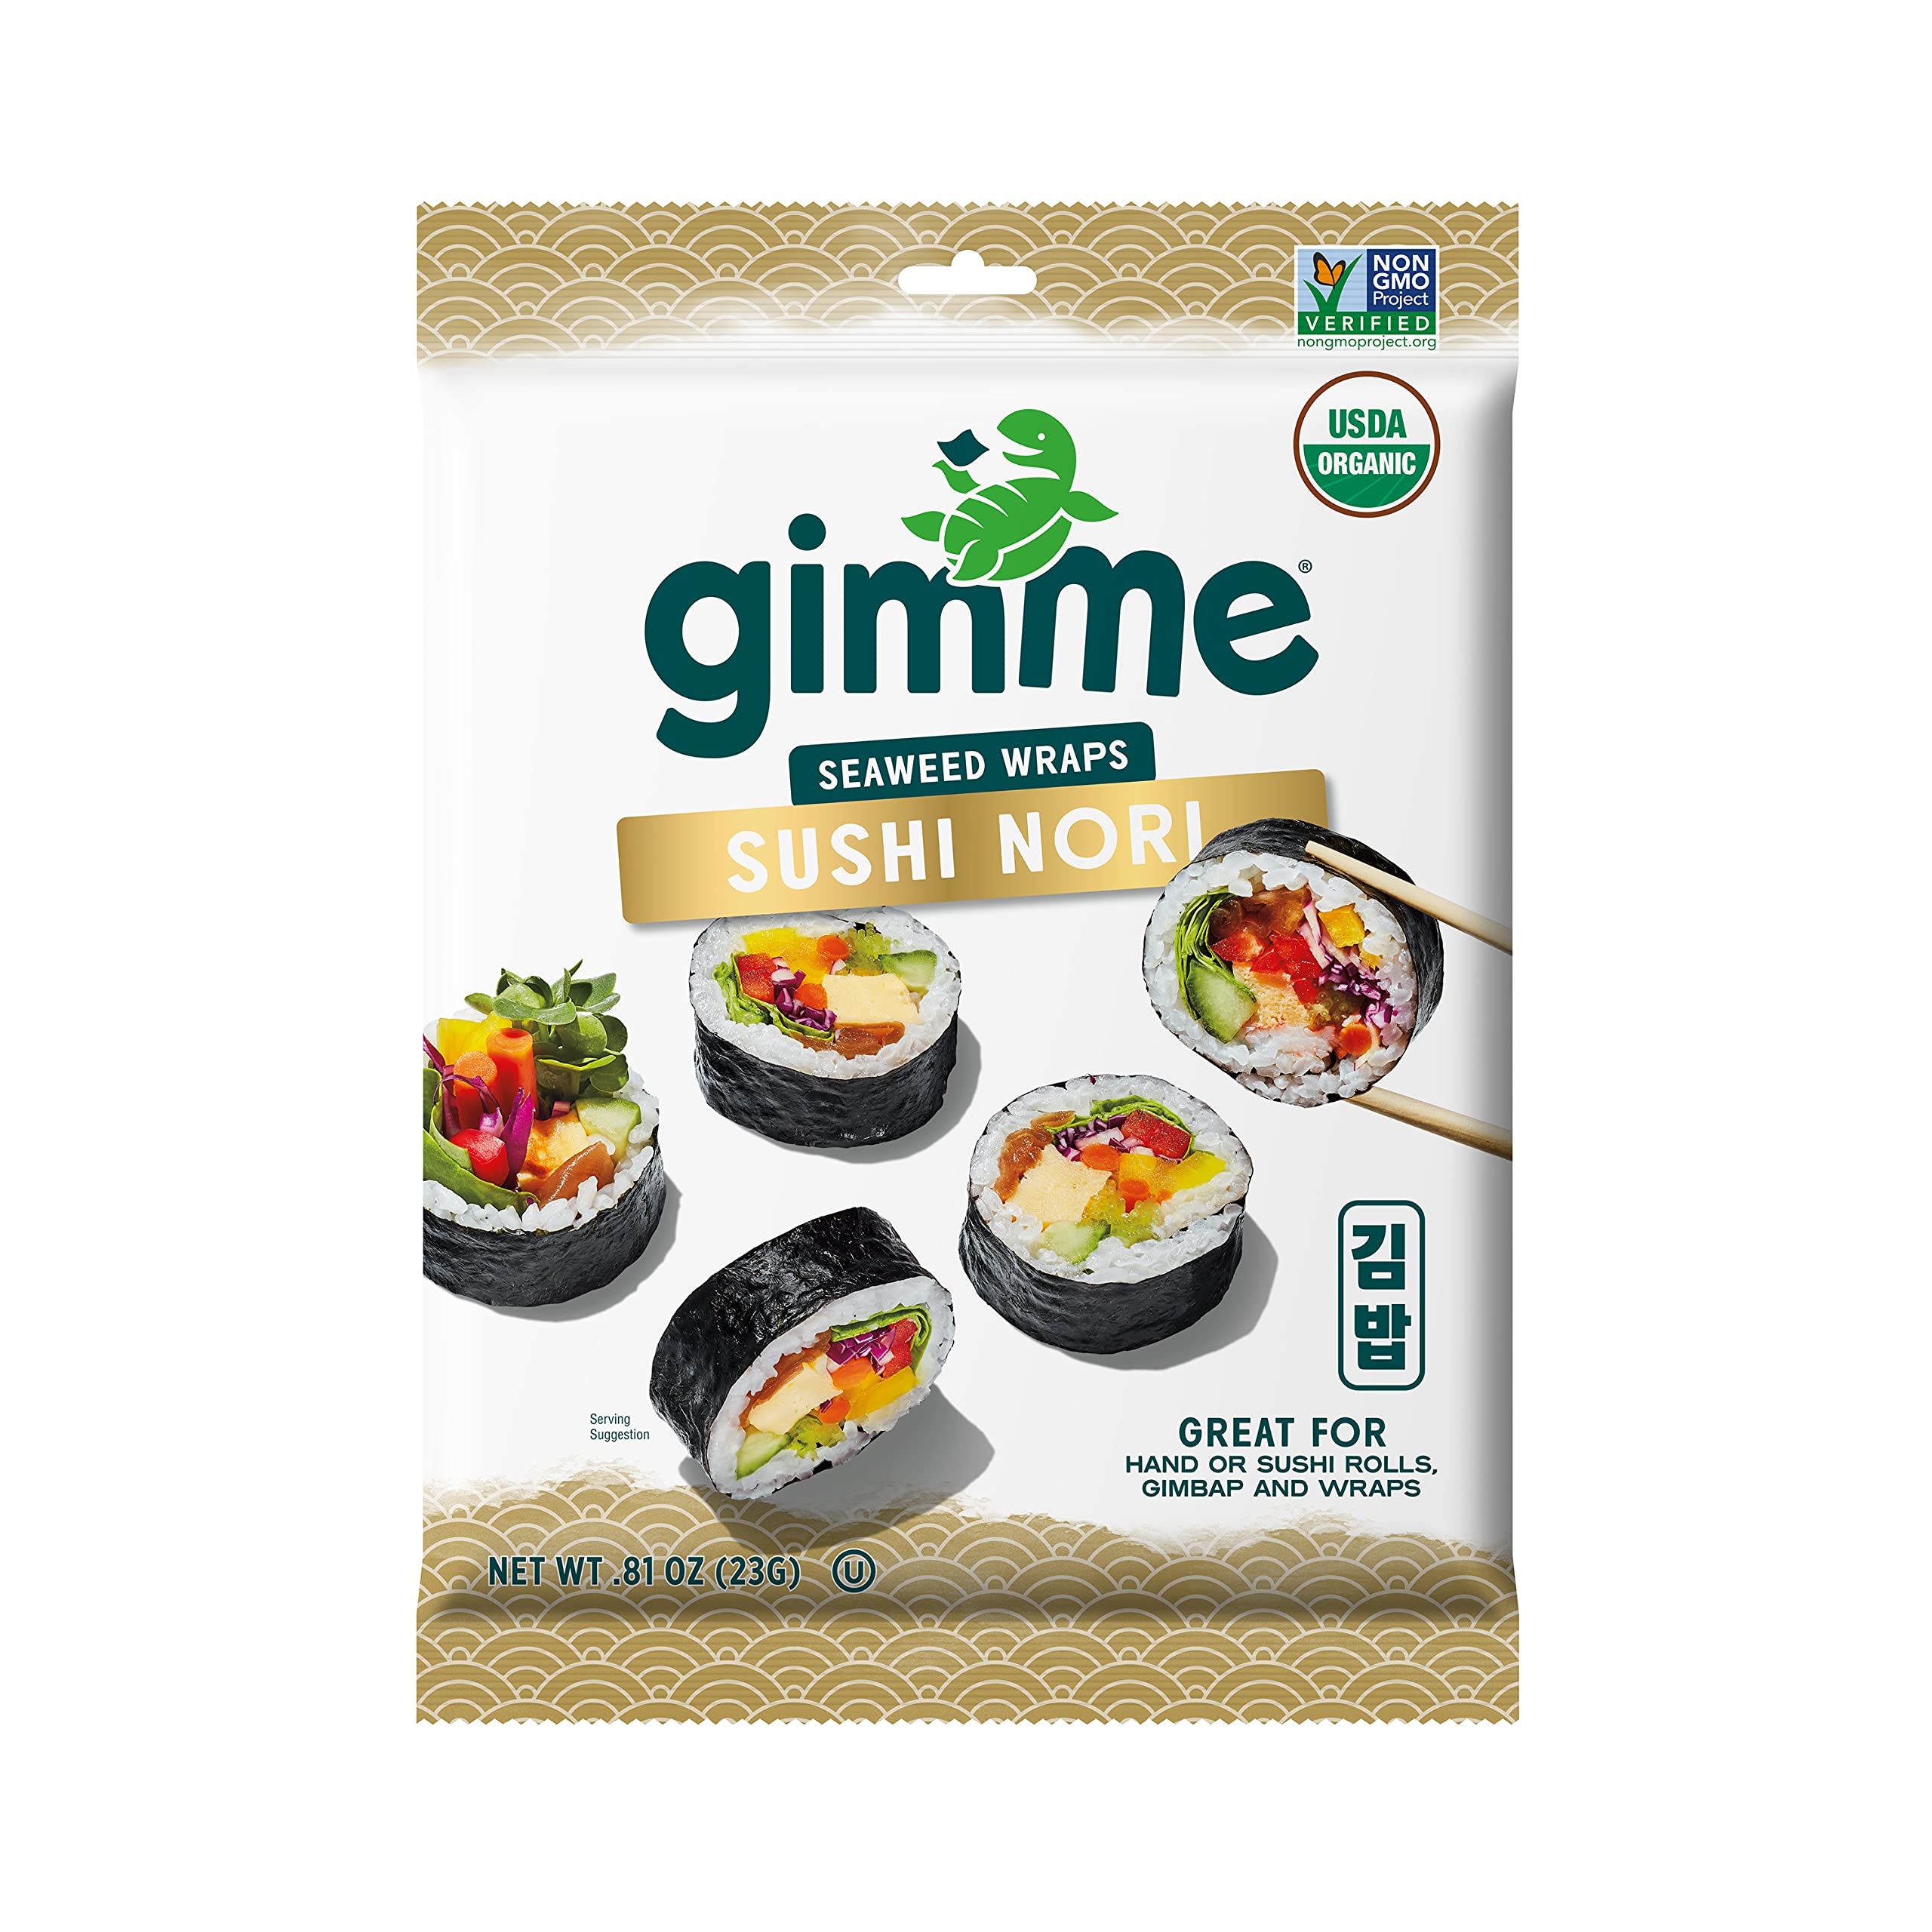 9-Sheets gimMe Organic Roasted Seaweed Sushi Nori $2.40 w/ Subscribe & Save